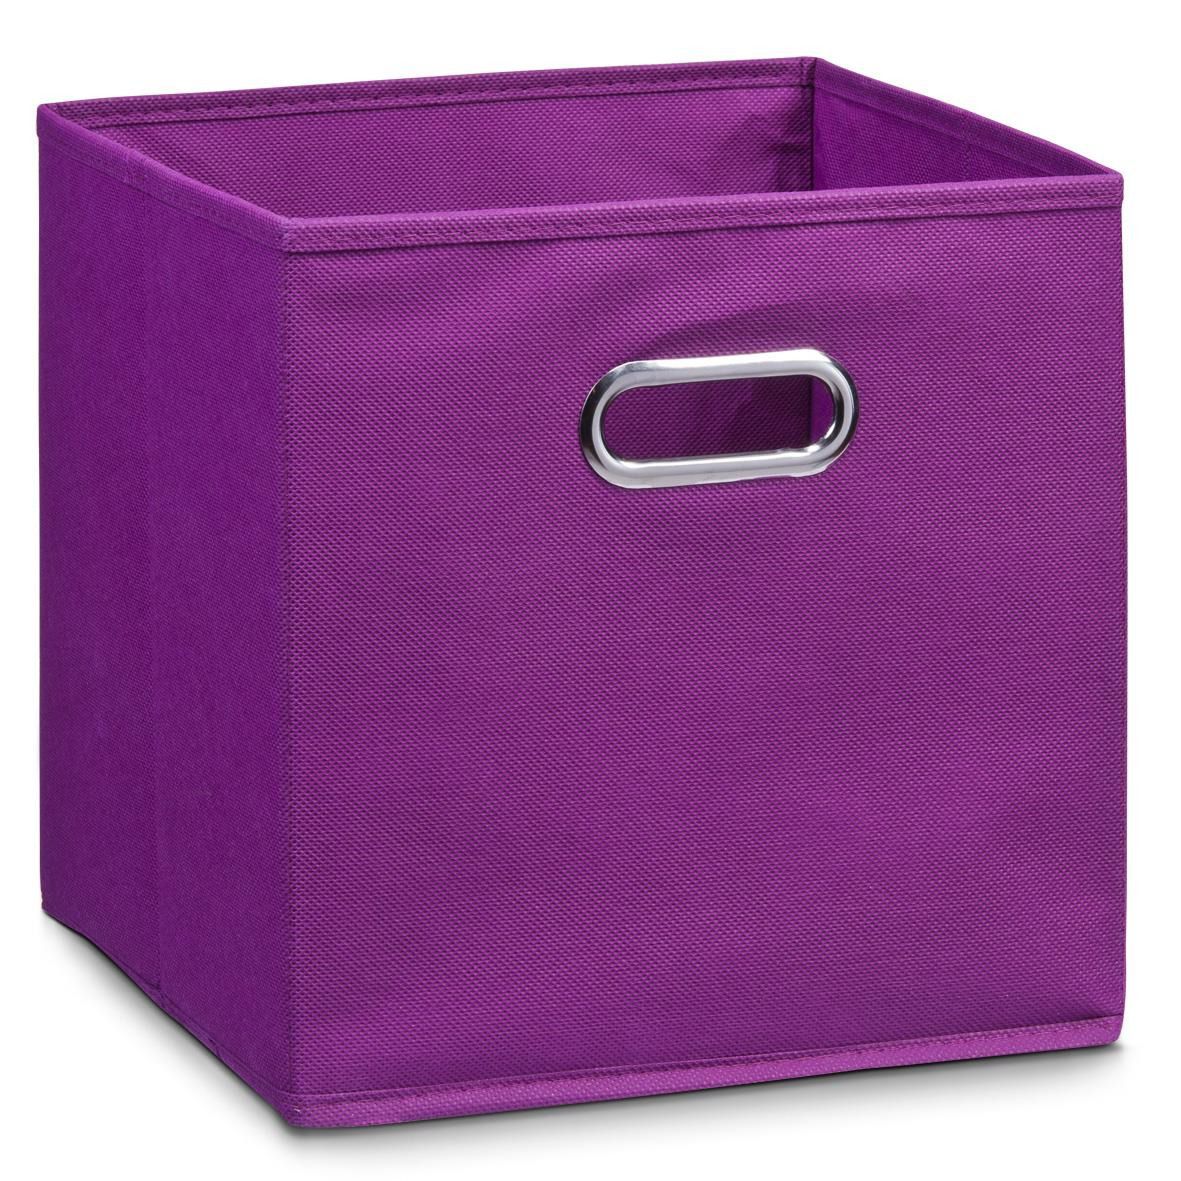 Úložný box, fialový, 32 x 32 x 32 cm, textilní, ZELLER - EMAKO.CZ s.r.o.